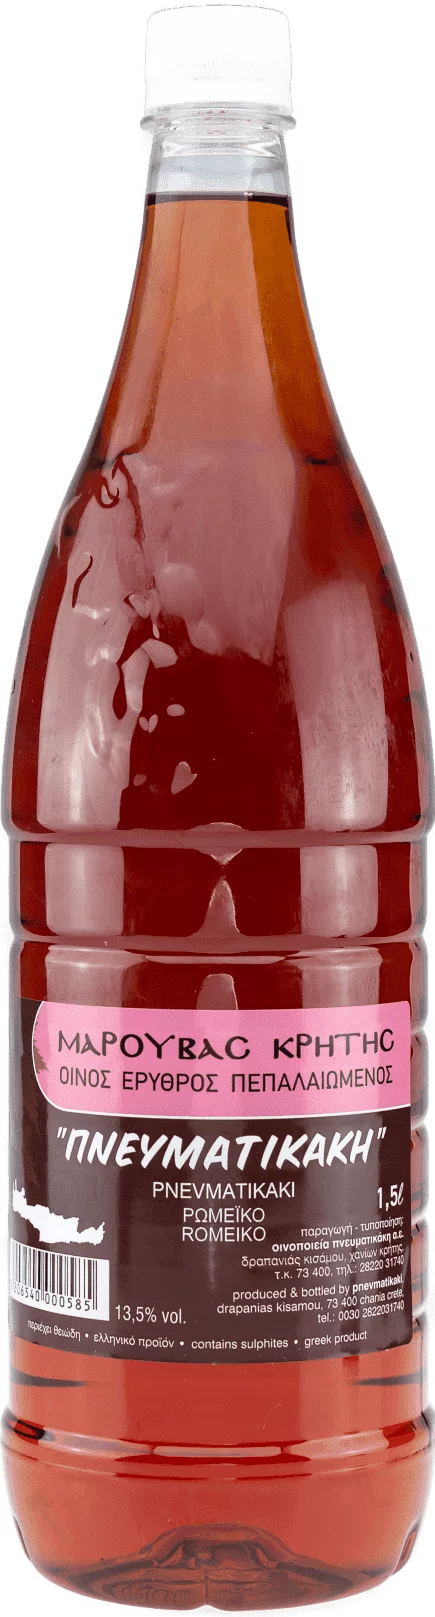 pneym-bottle-46 (1)